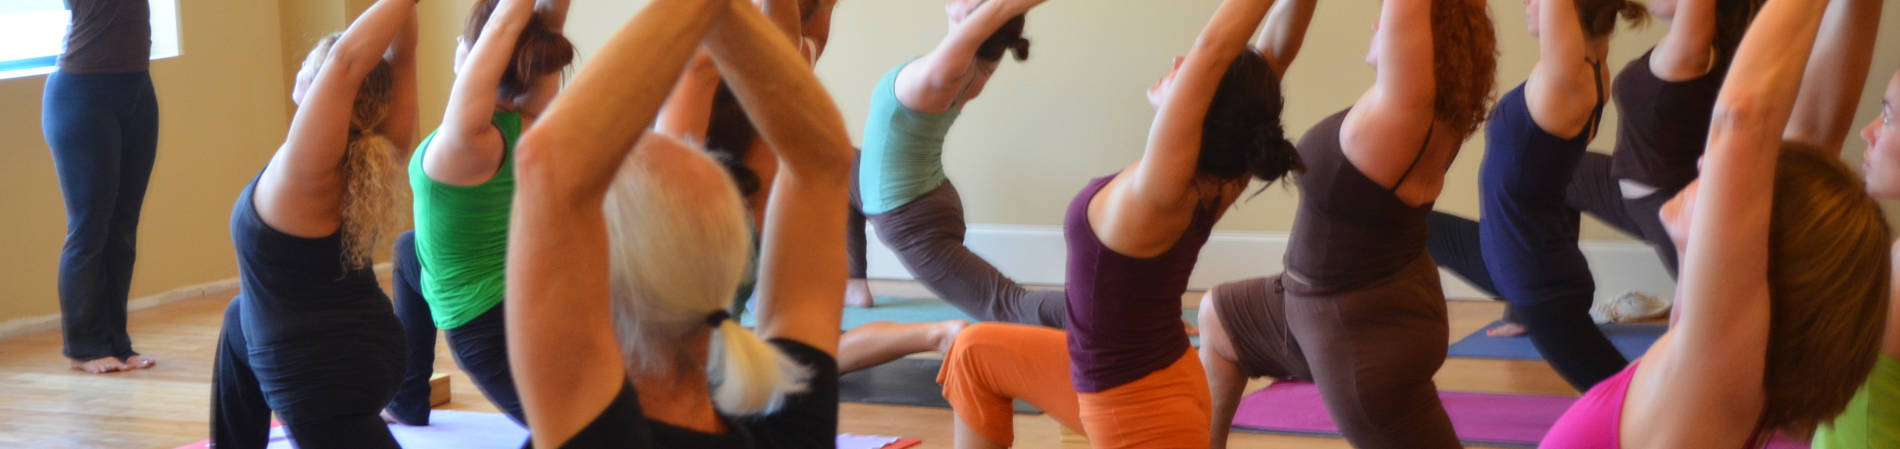 Aulas de yoga